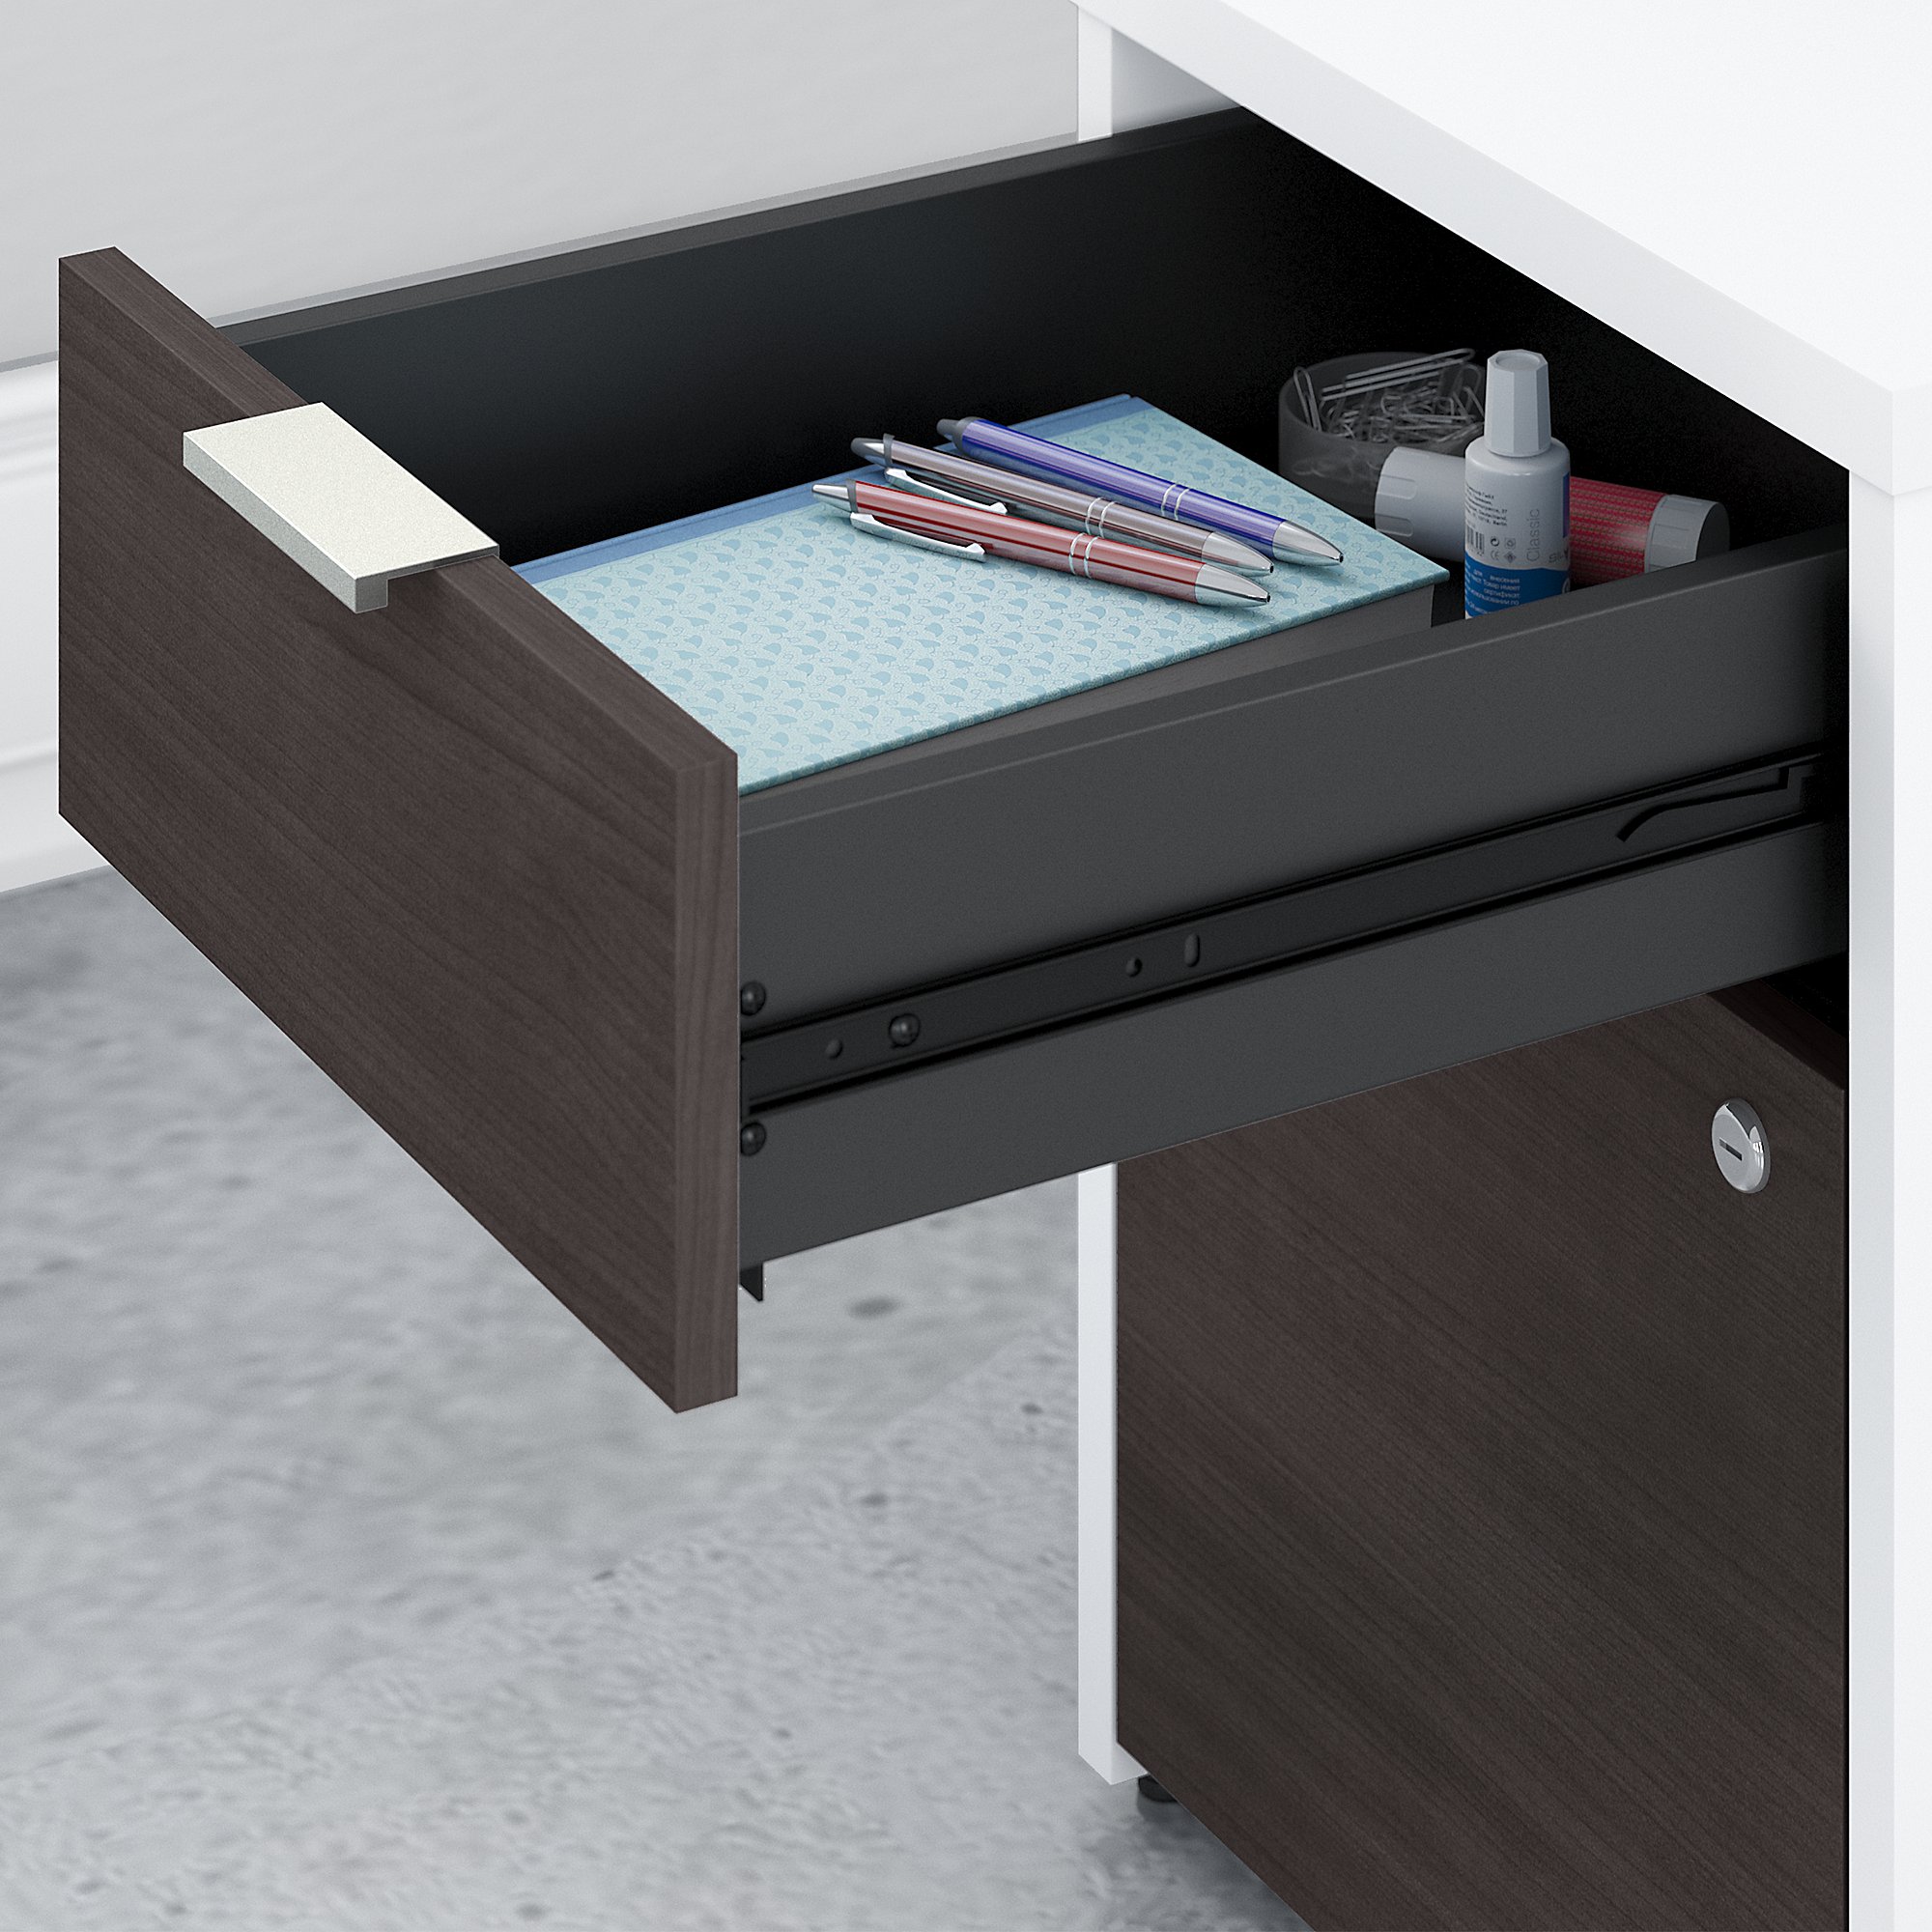 Home office furniture desk 4 drawers upper drawer